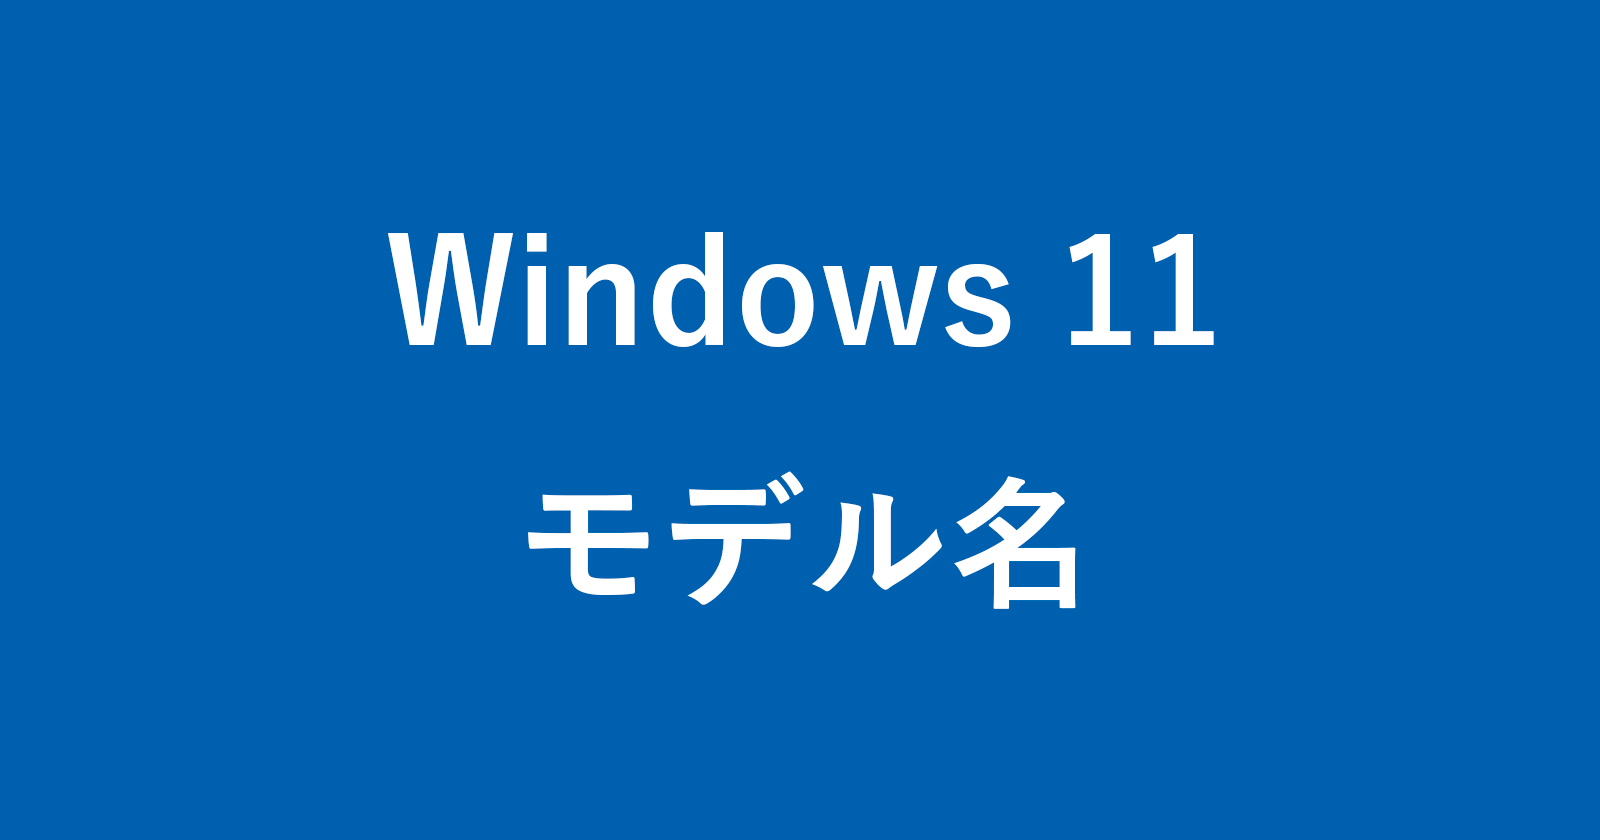 windows 11 product name